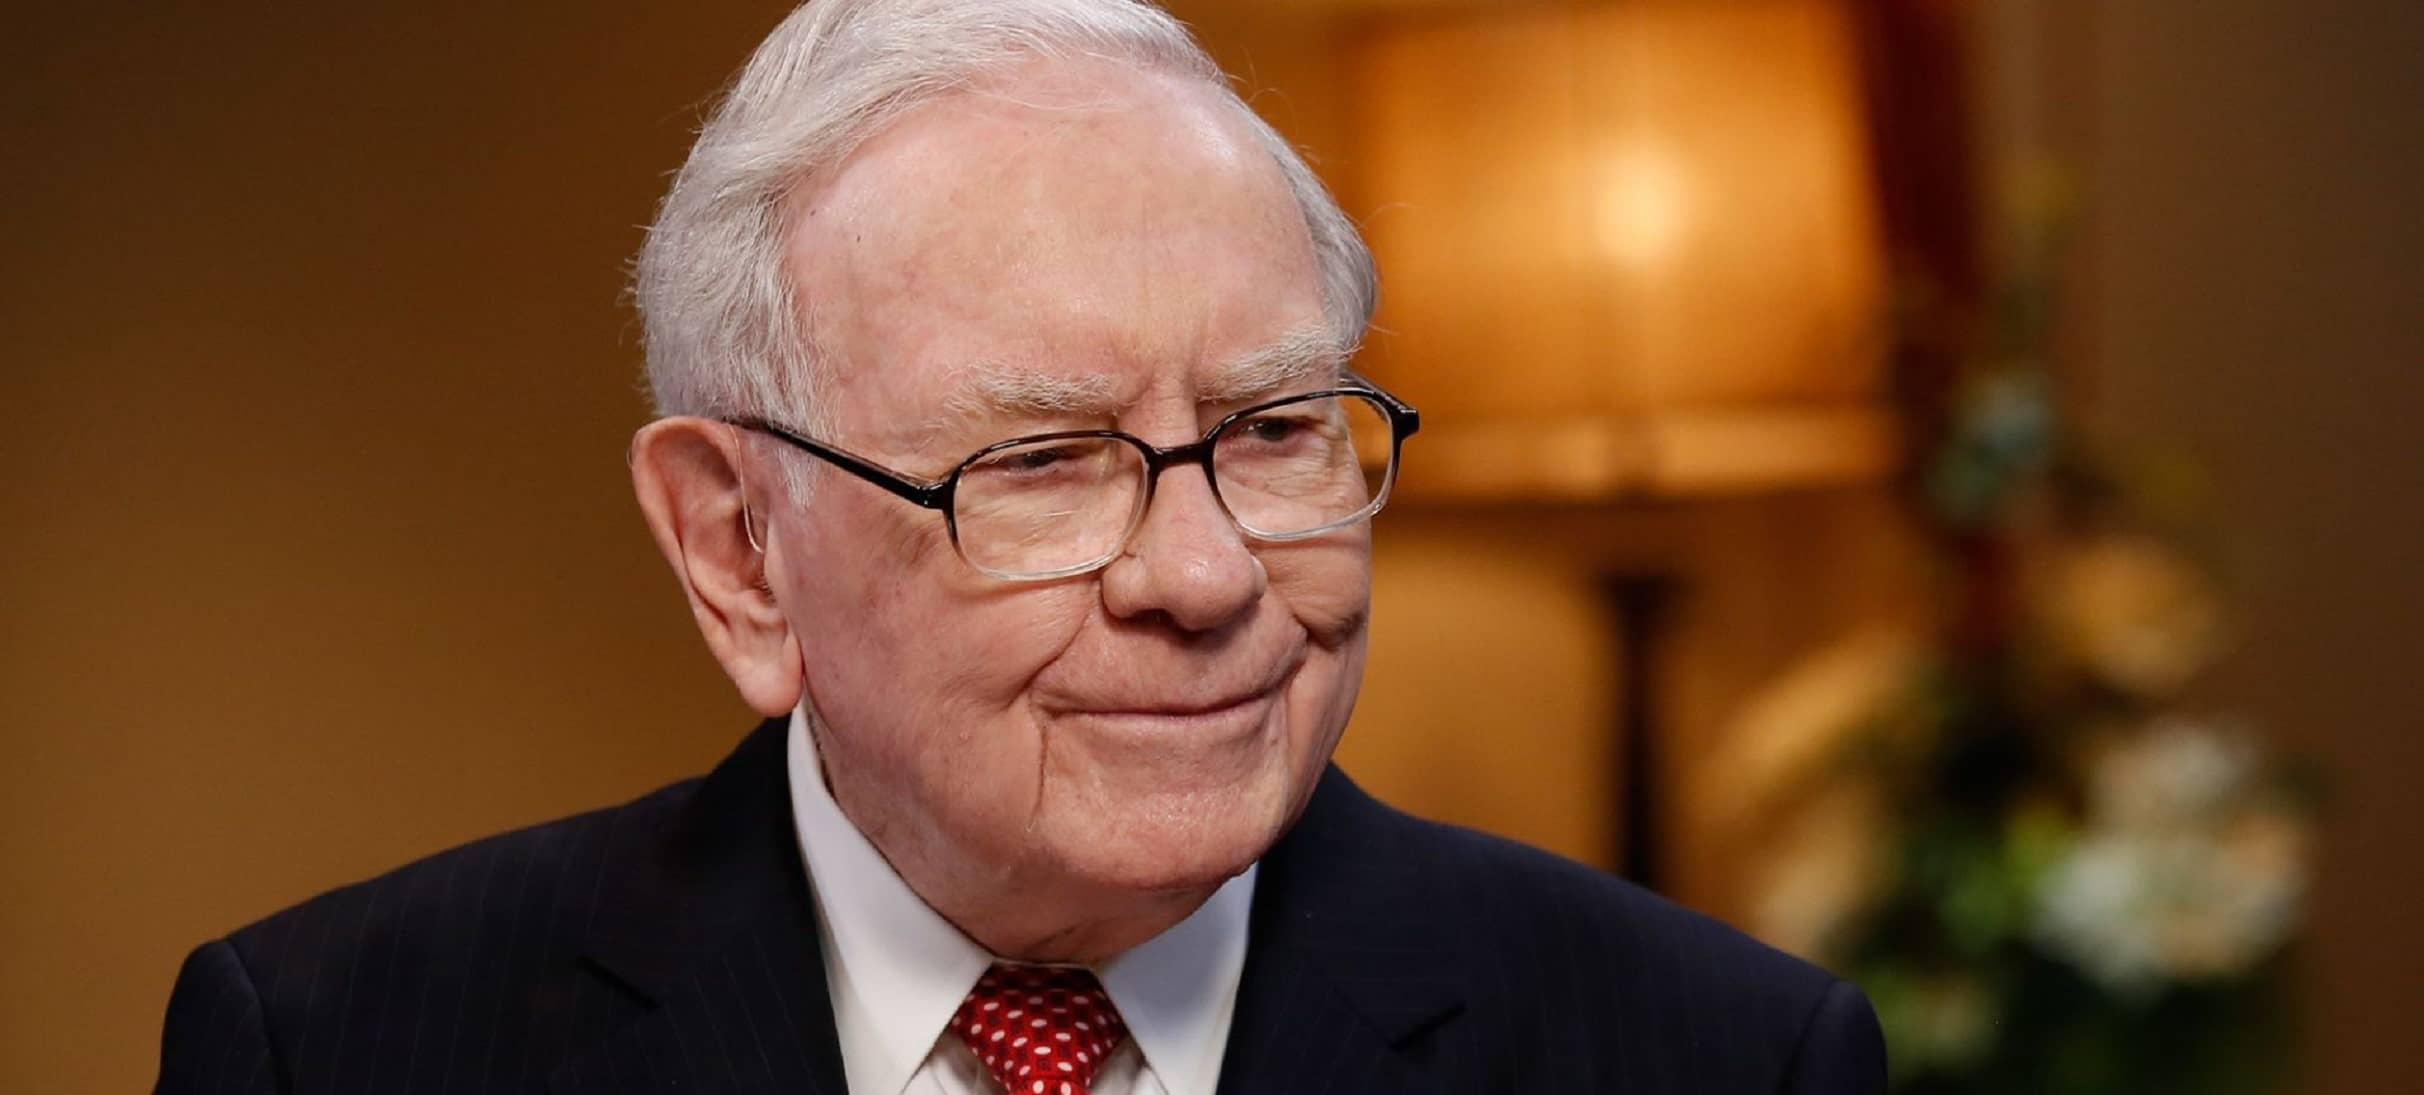 Warren Buffett explica o que faria se emitisse sua própria moeda, a “Buffett Bucks”